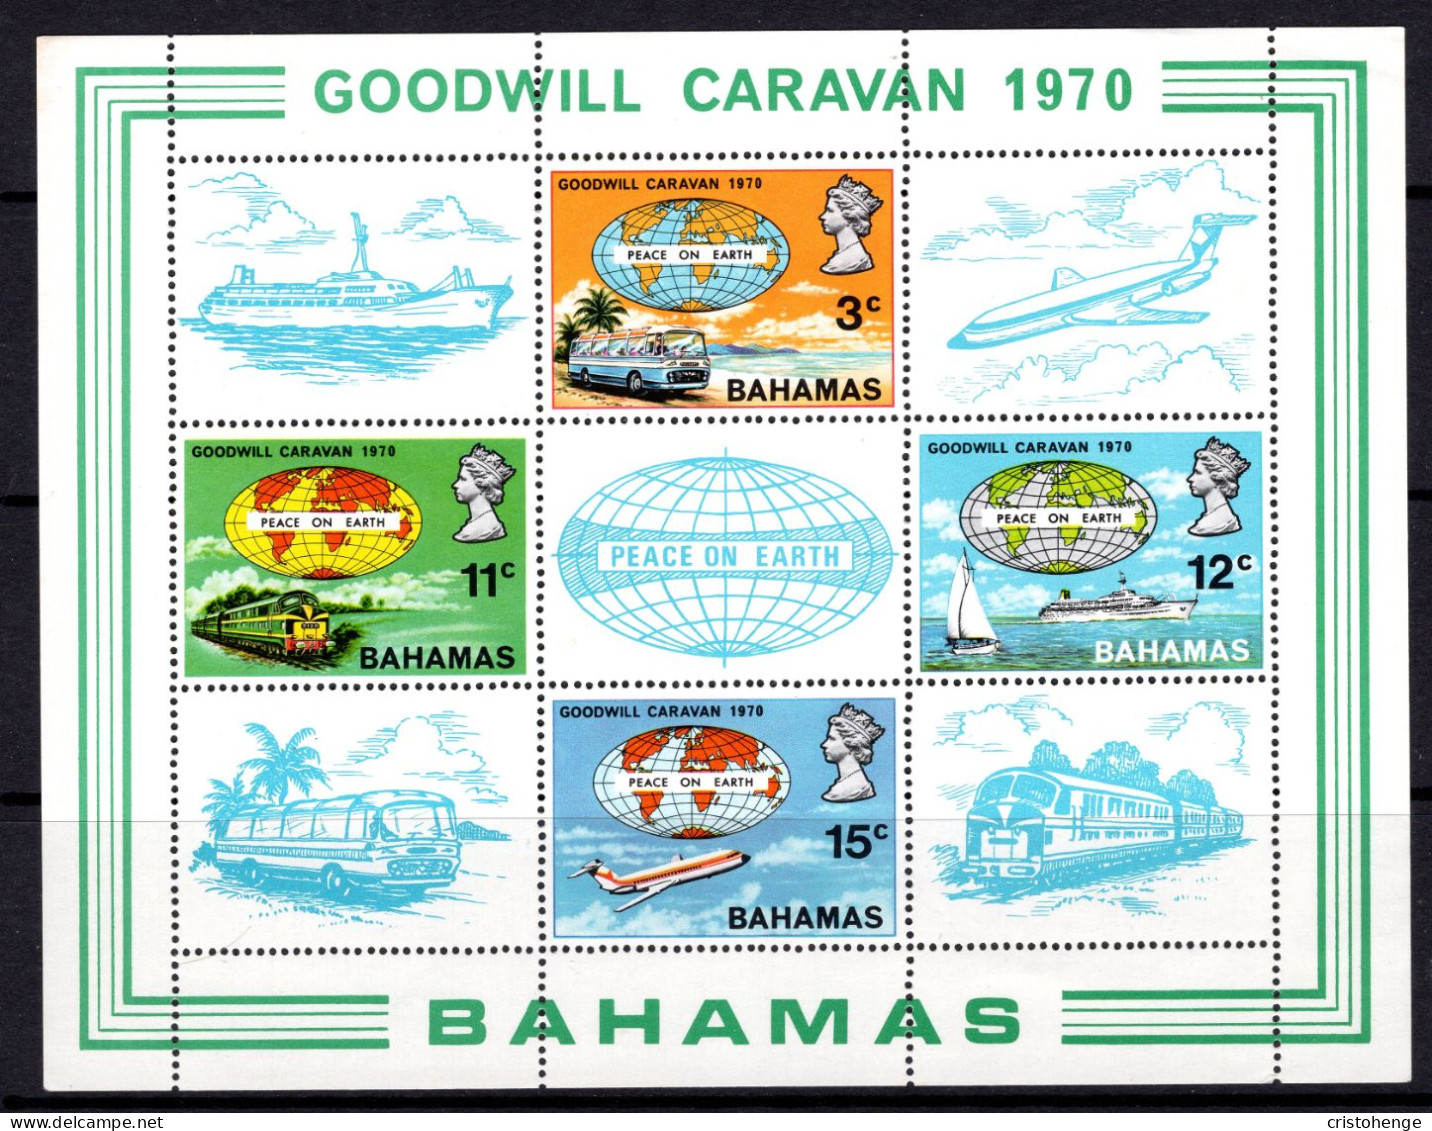 Bahamas 1970 Goodwill Caravan MS MNH (SG MS351) - 1963-1973 Interne Autonomie